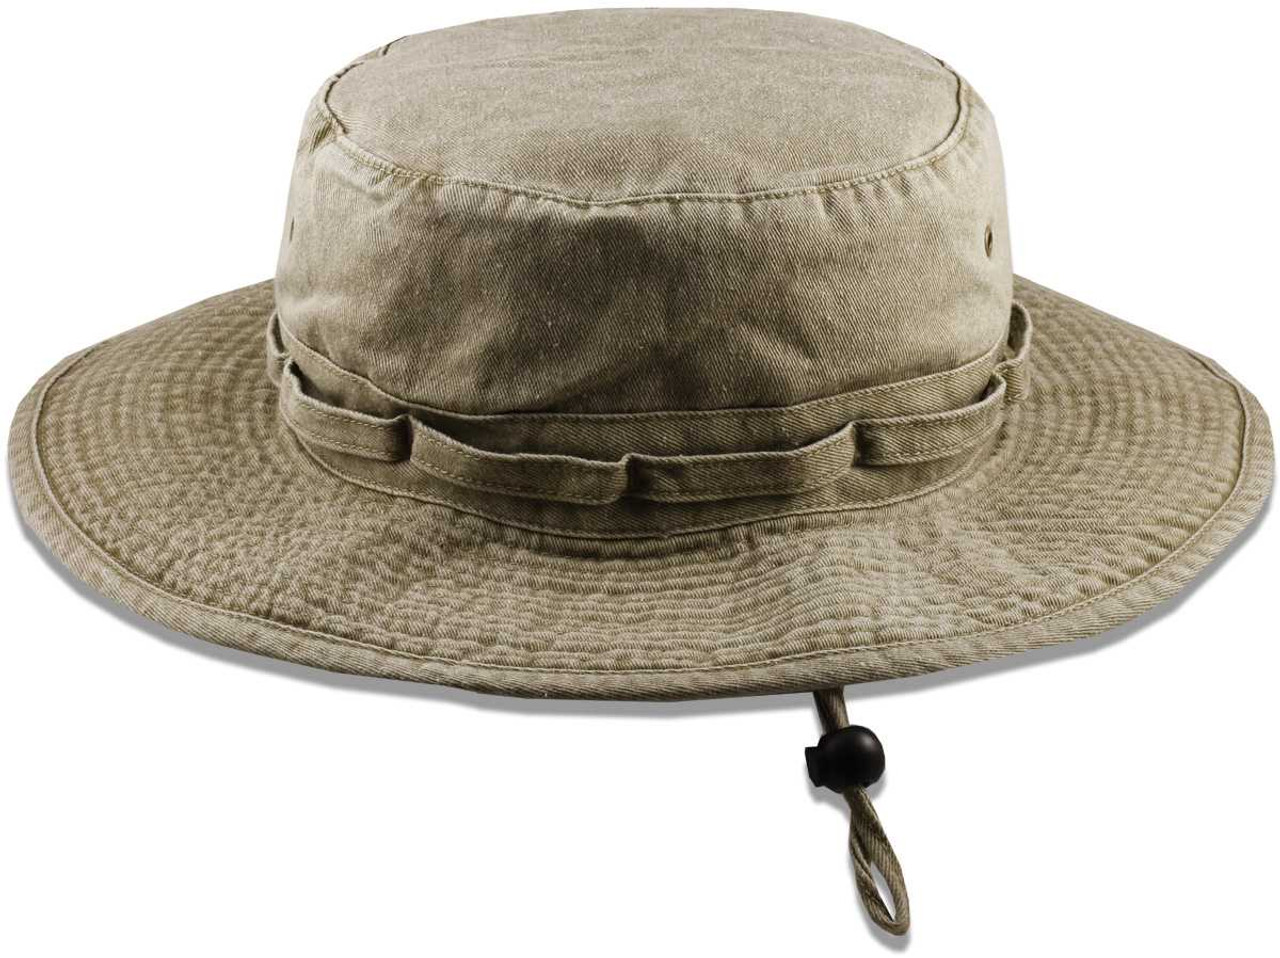 Large Size Fishing Hats Big Head Summer Sun Hat Reversible Bucket Caps L XL  XXL